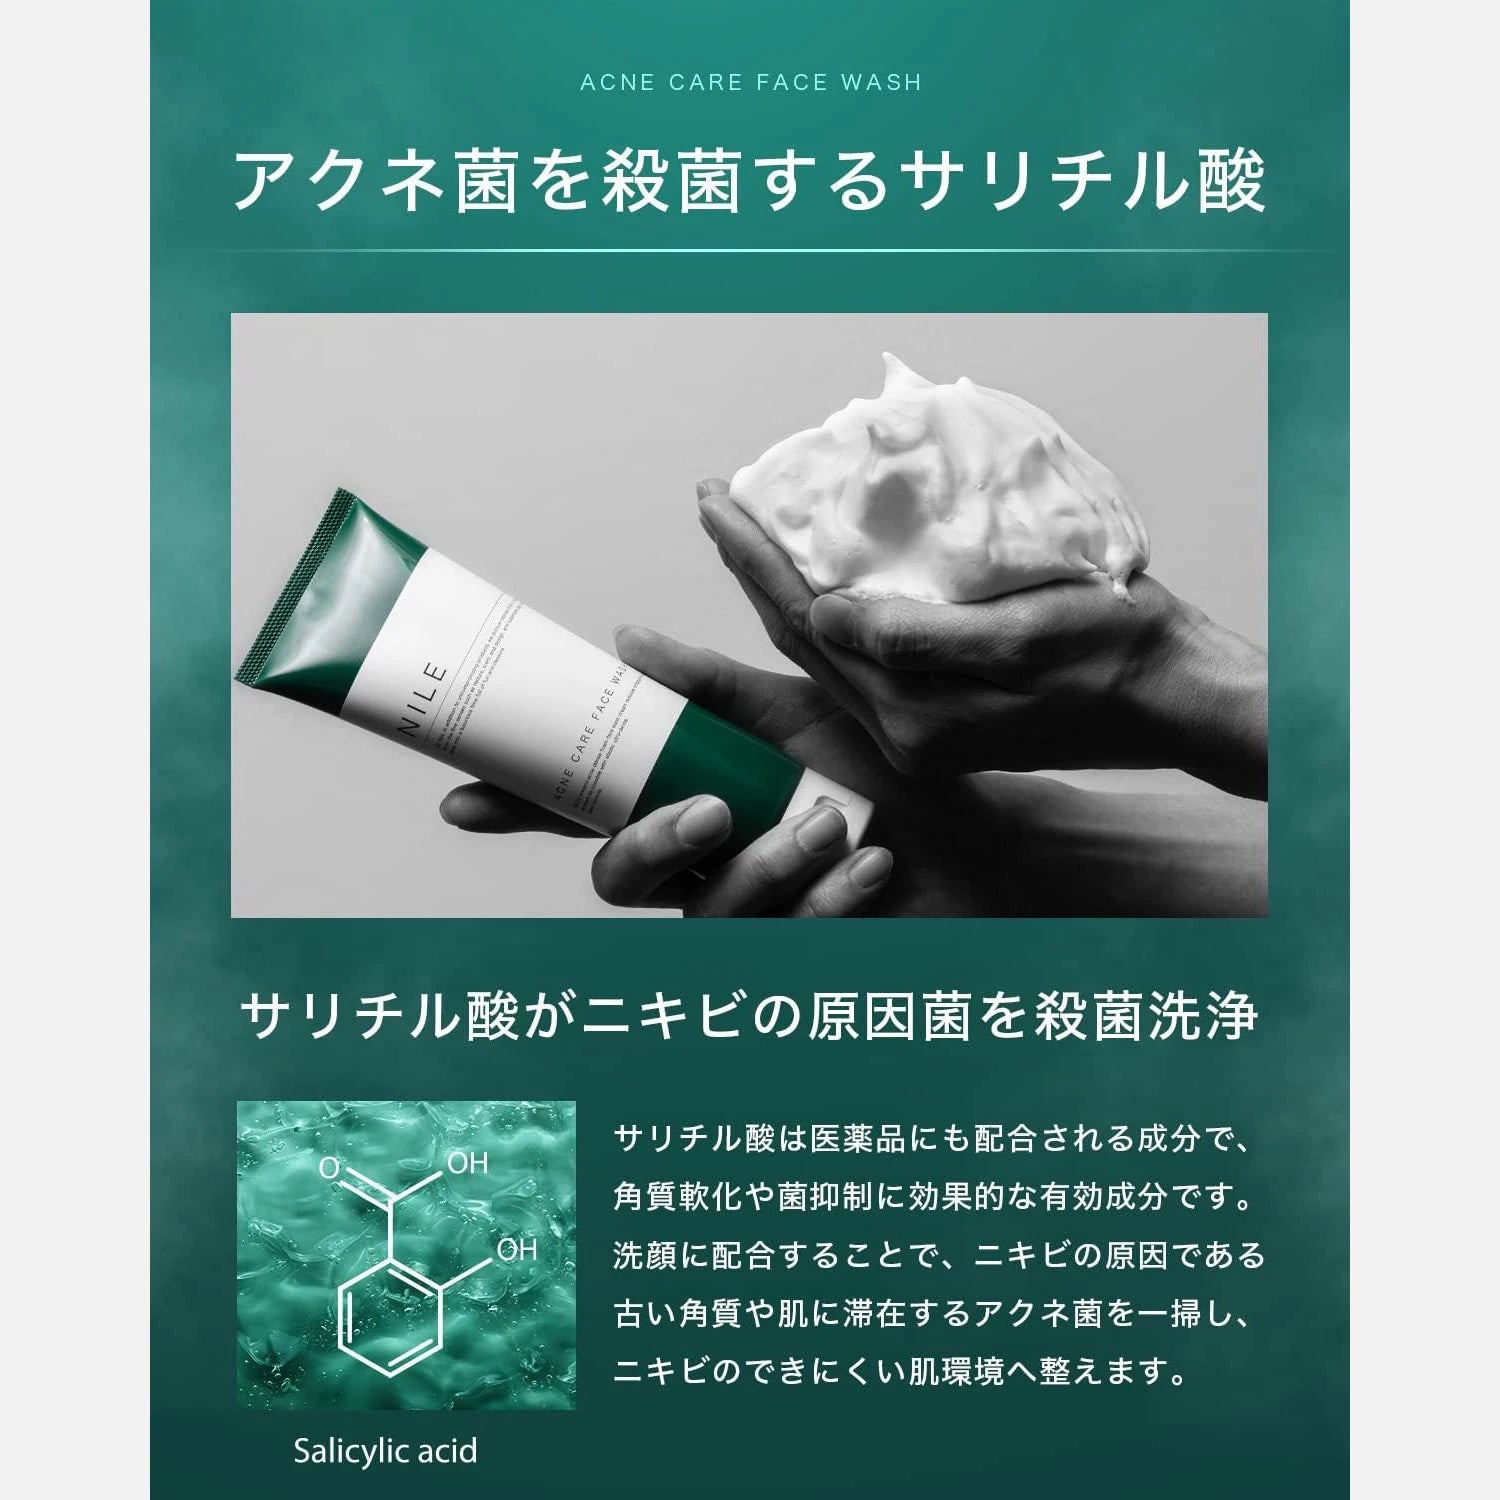 Nile Acne Care Face Wash 150g - Buy Me Japan